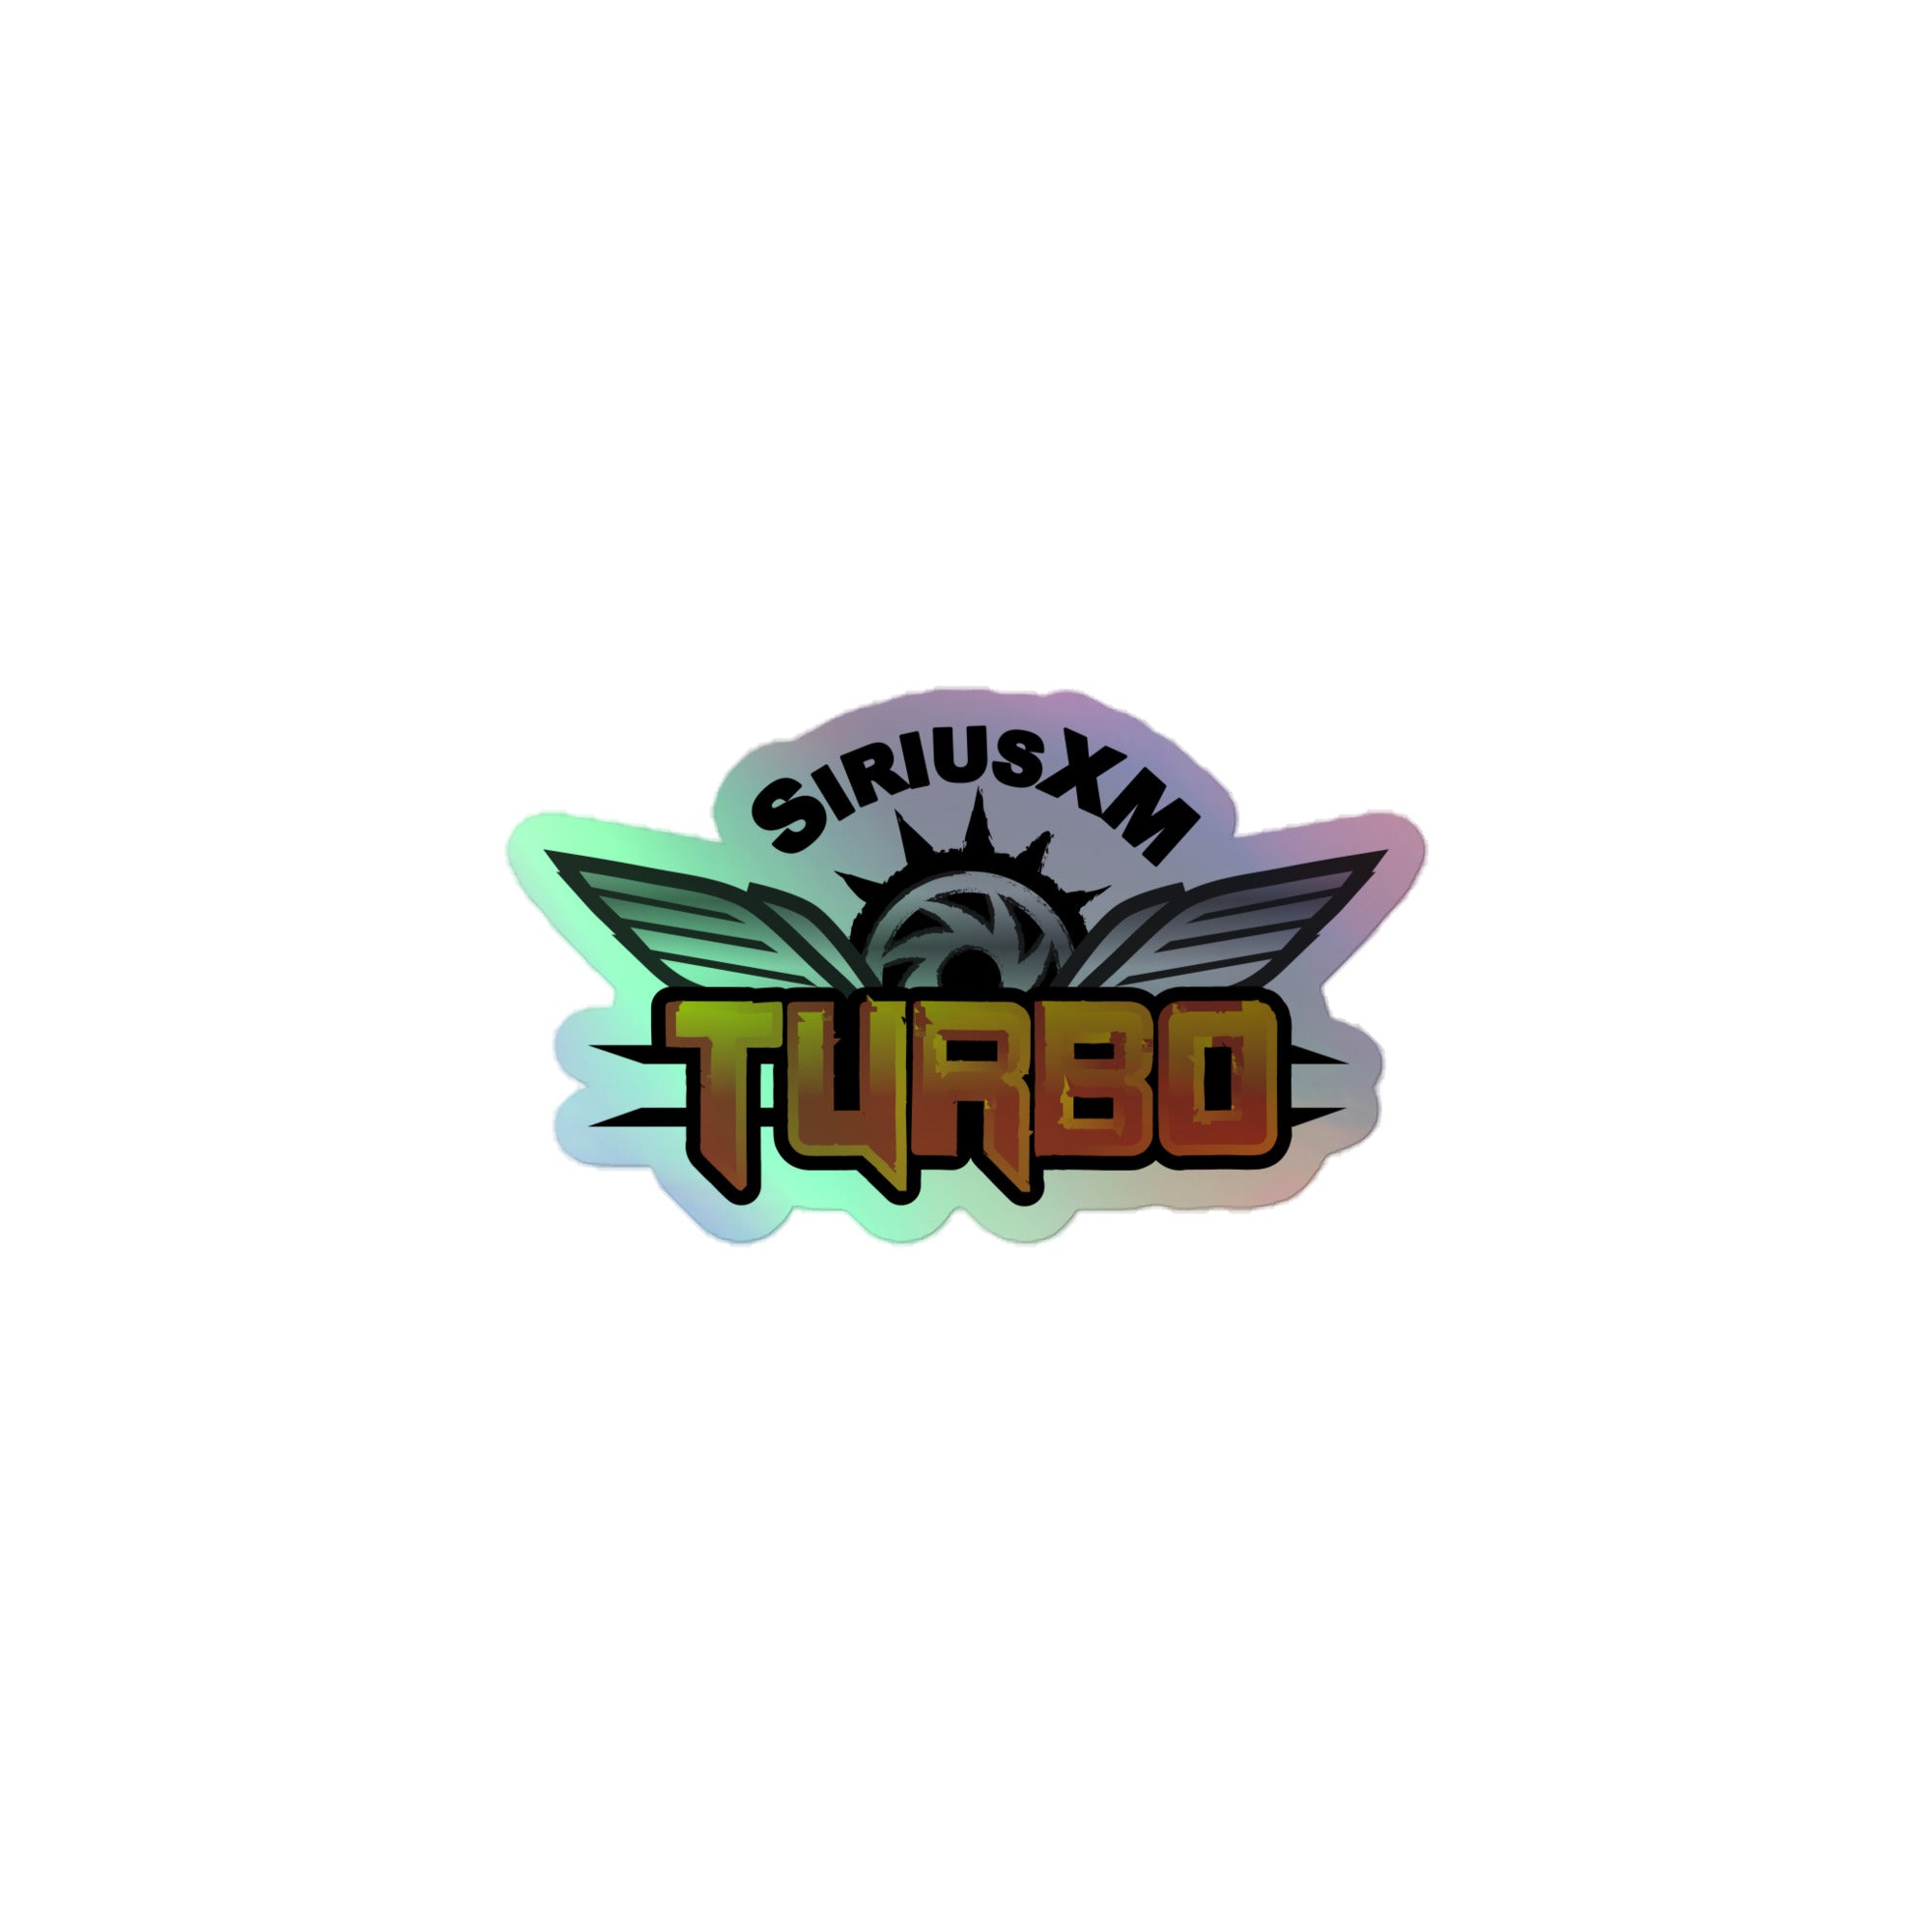 SiriusXM Turbo: Holographic Sticker